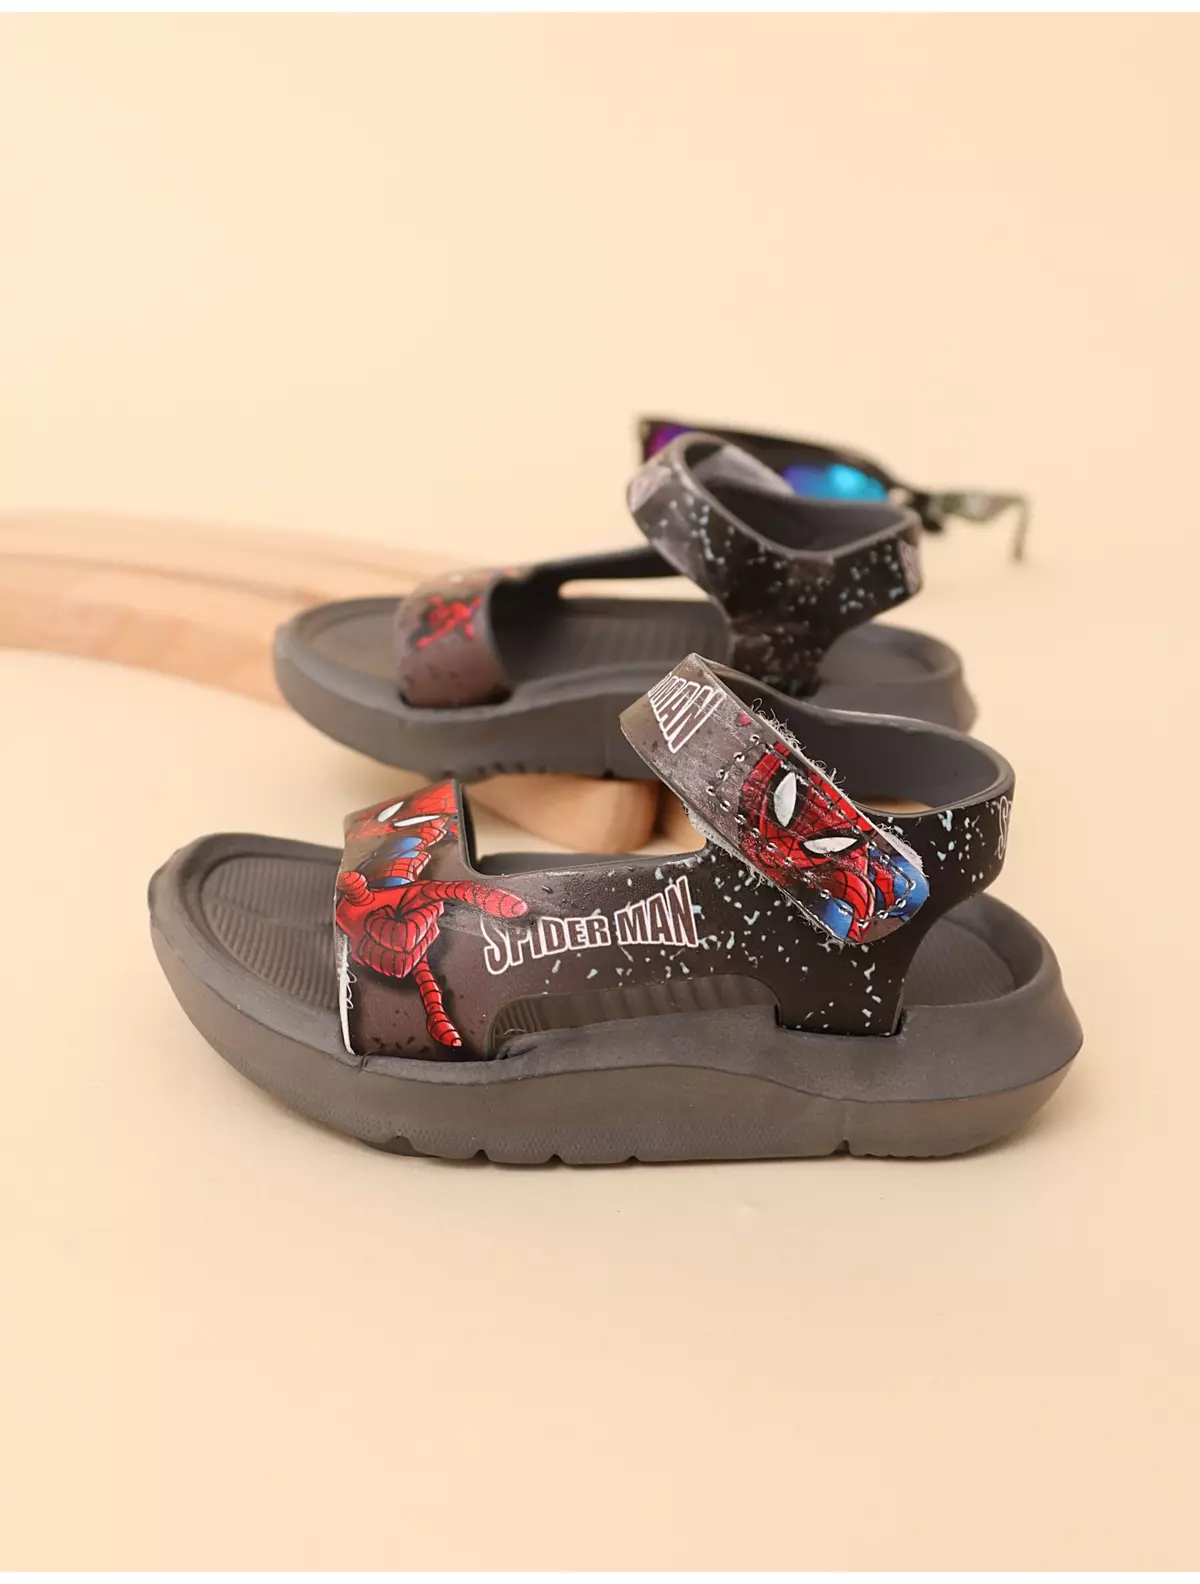 Sandale spuma spiderman negru-negru